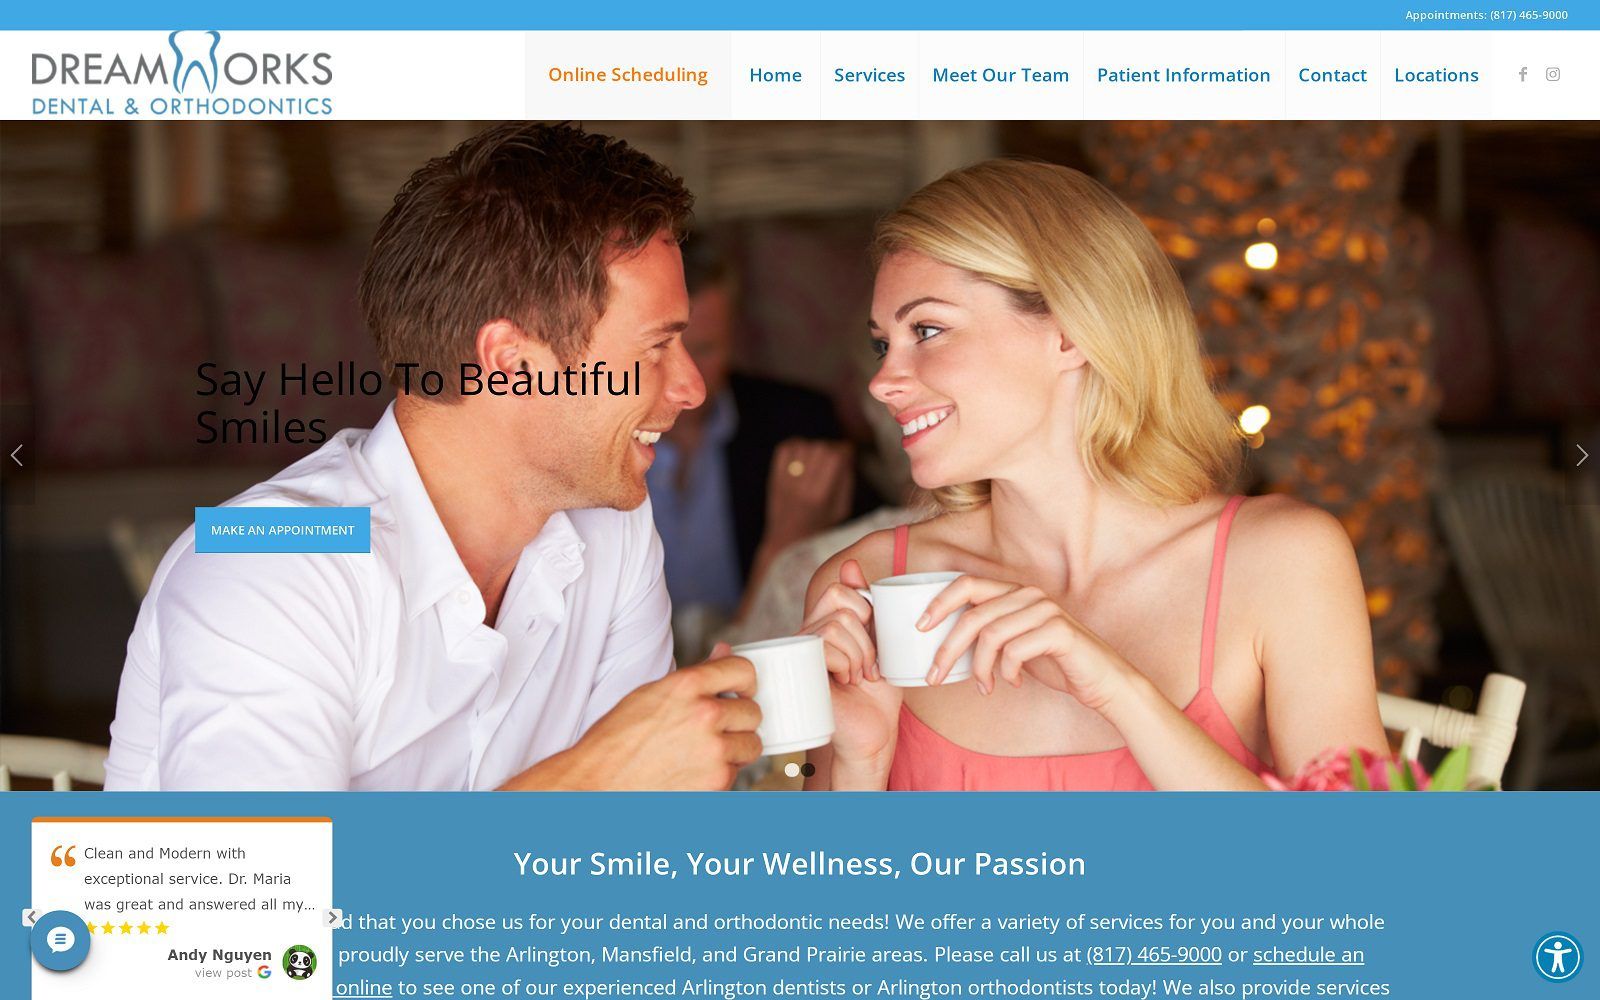 The screenshot of dreamworks dental and orthodontics website